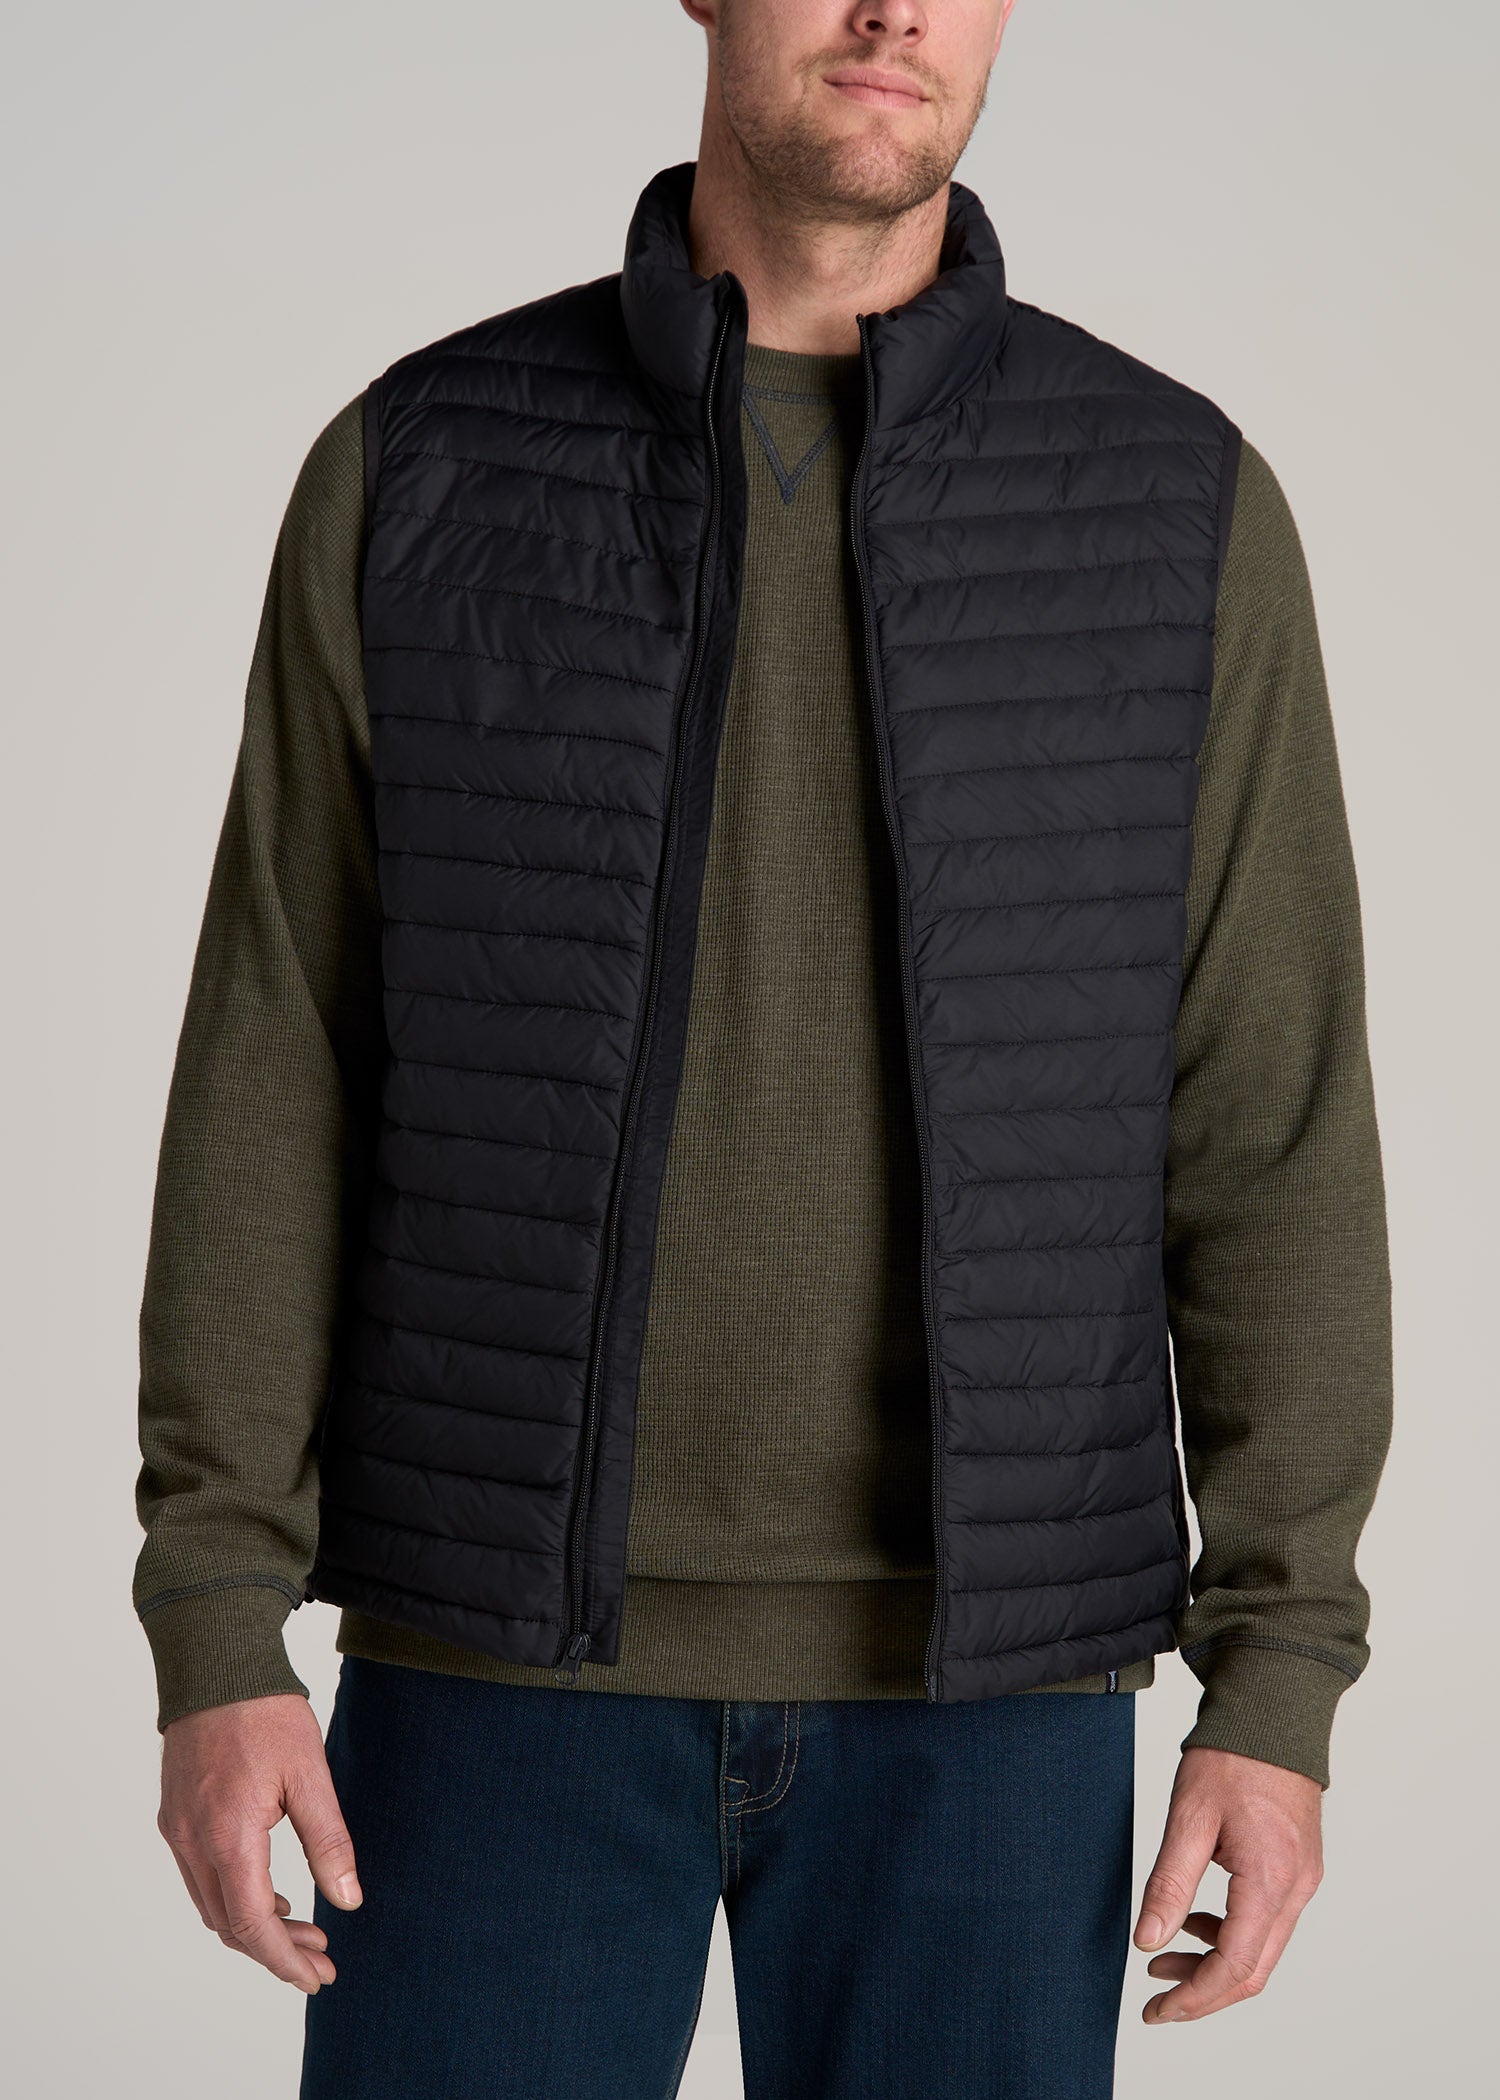 Wrangler Big and Tall Vests for Men – Mens Polar Fleece Zip Up Sleeveless  Vest at  Men's Clothing store